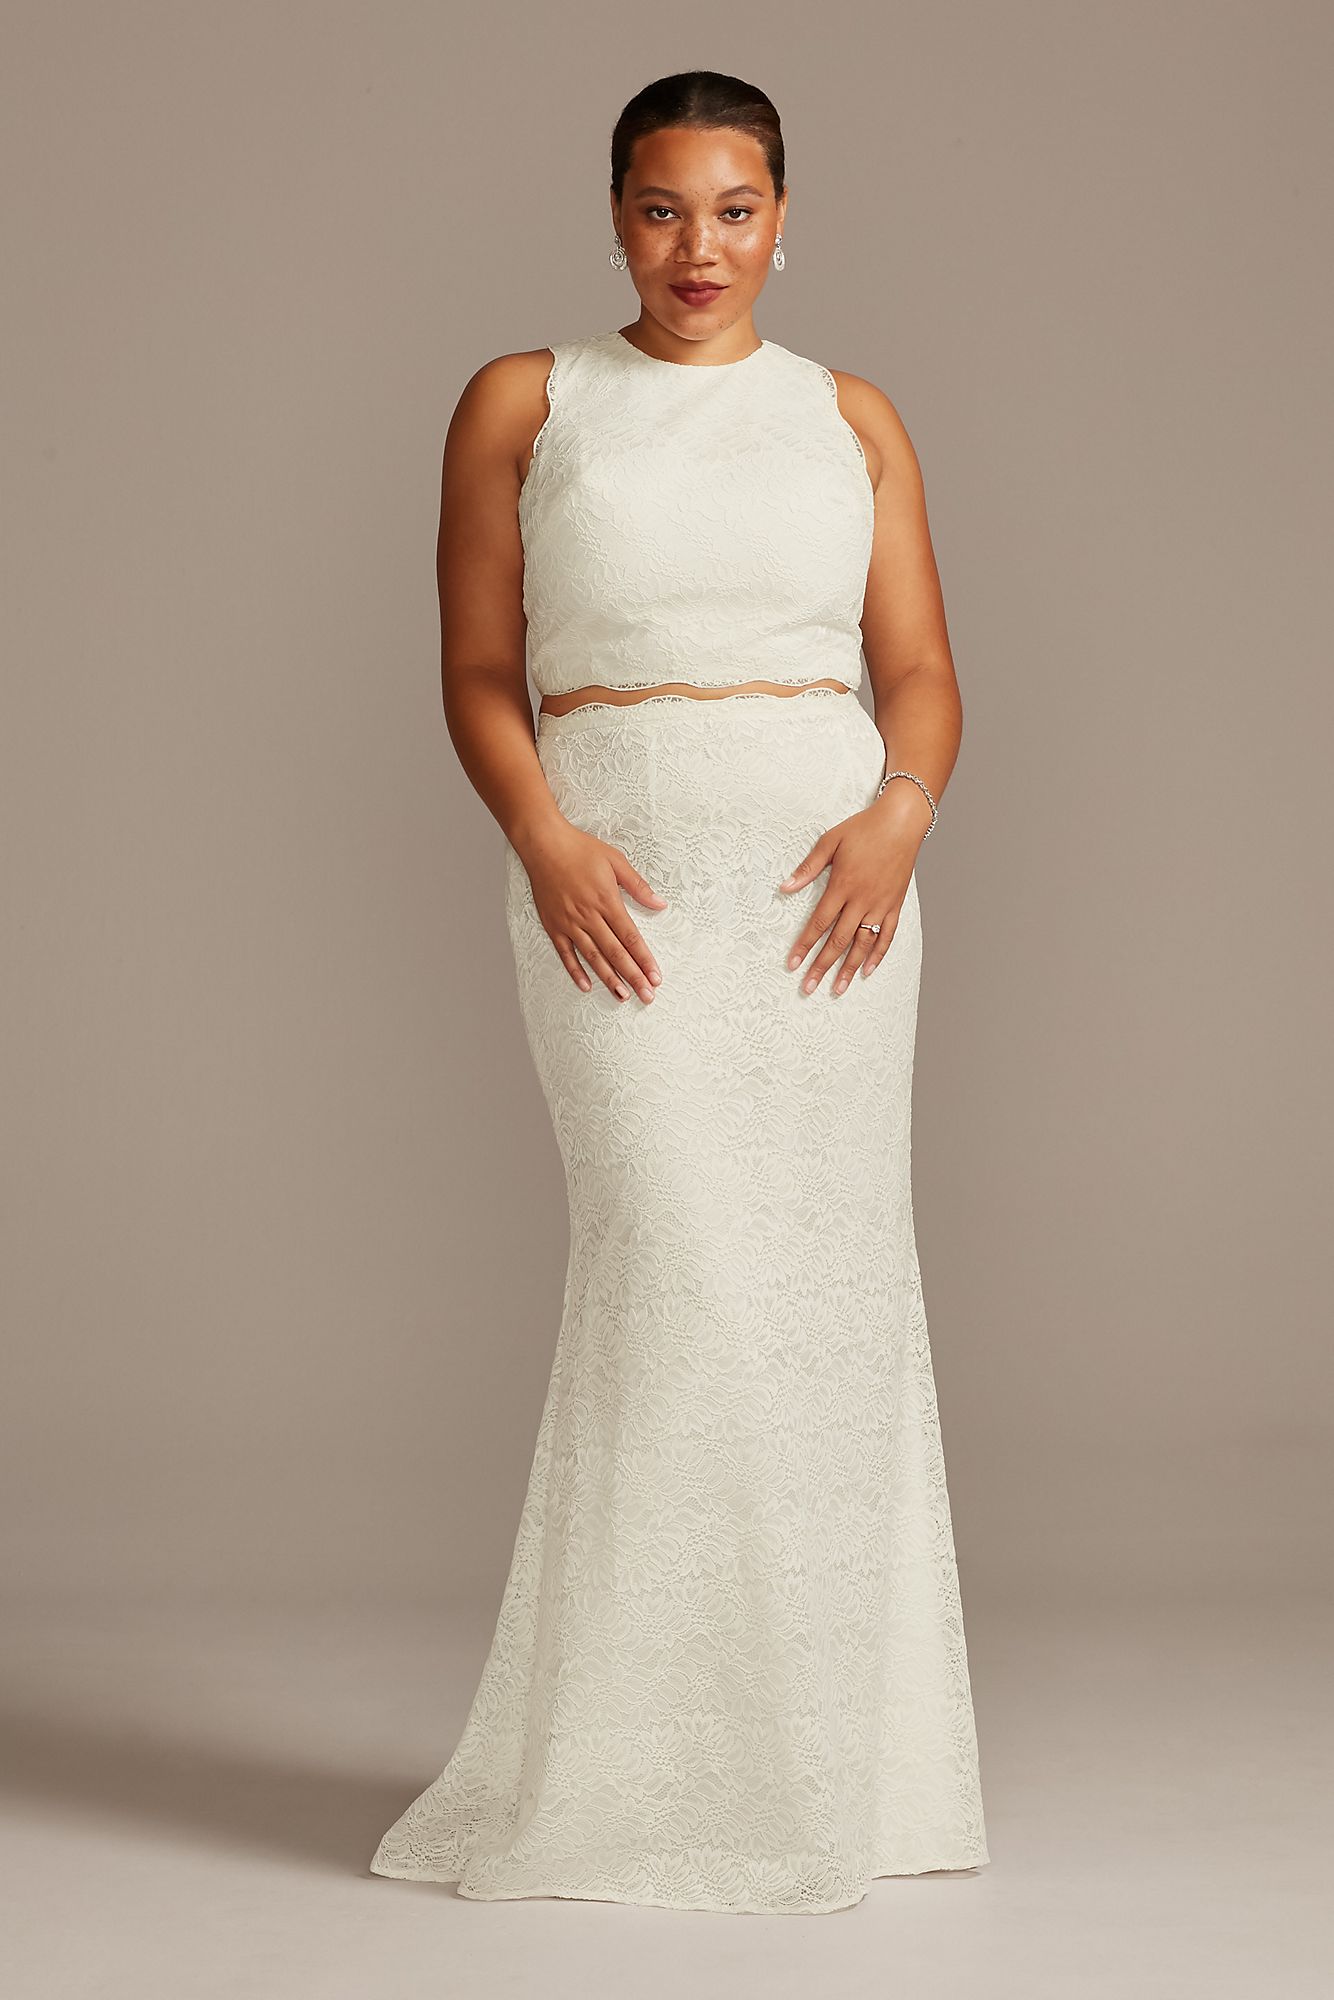 Two-Piece Scalloped Plus Size Wedding Dress Melissa Sweet [8MS251210] $219.99 |